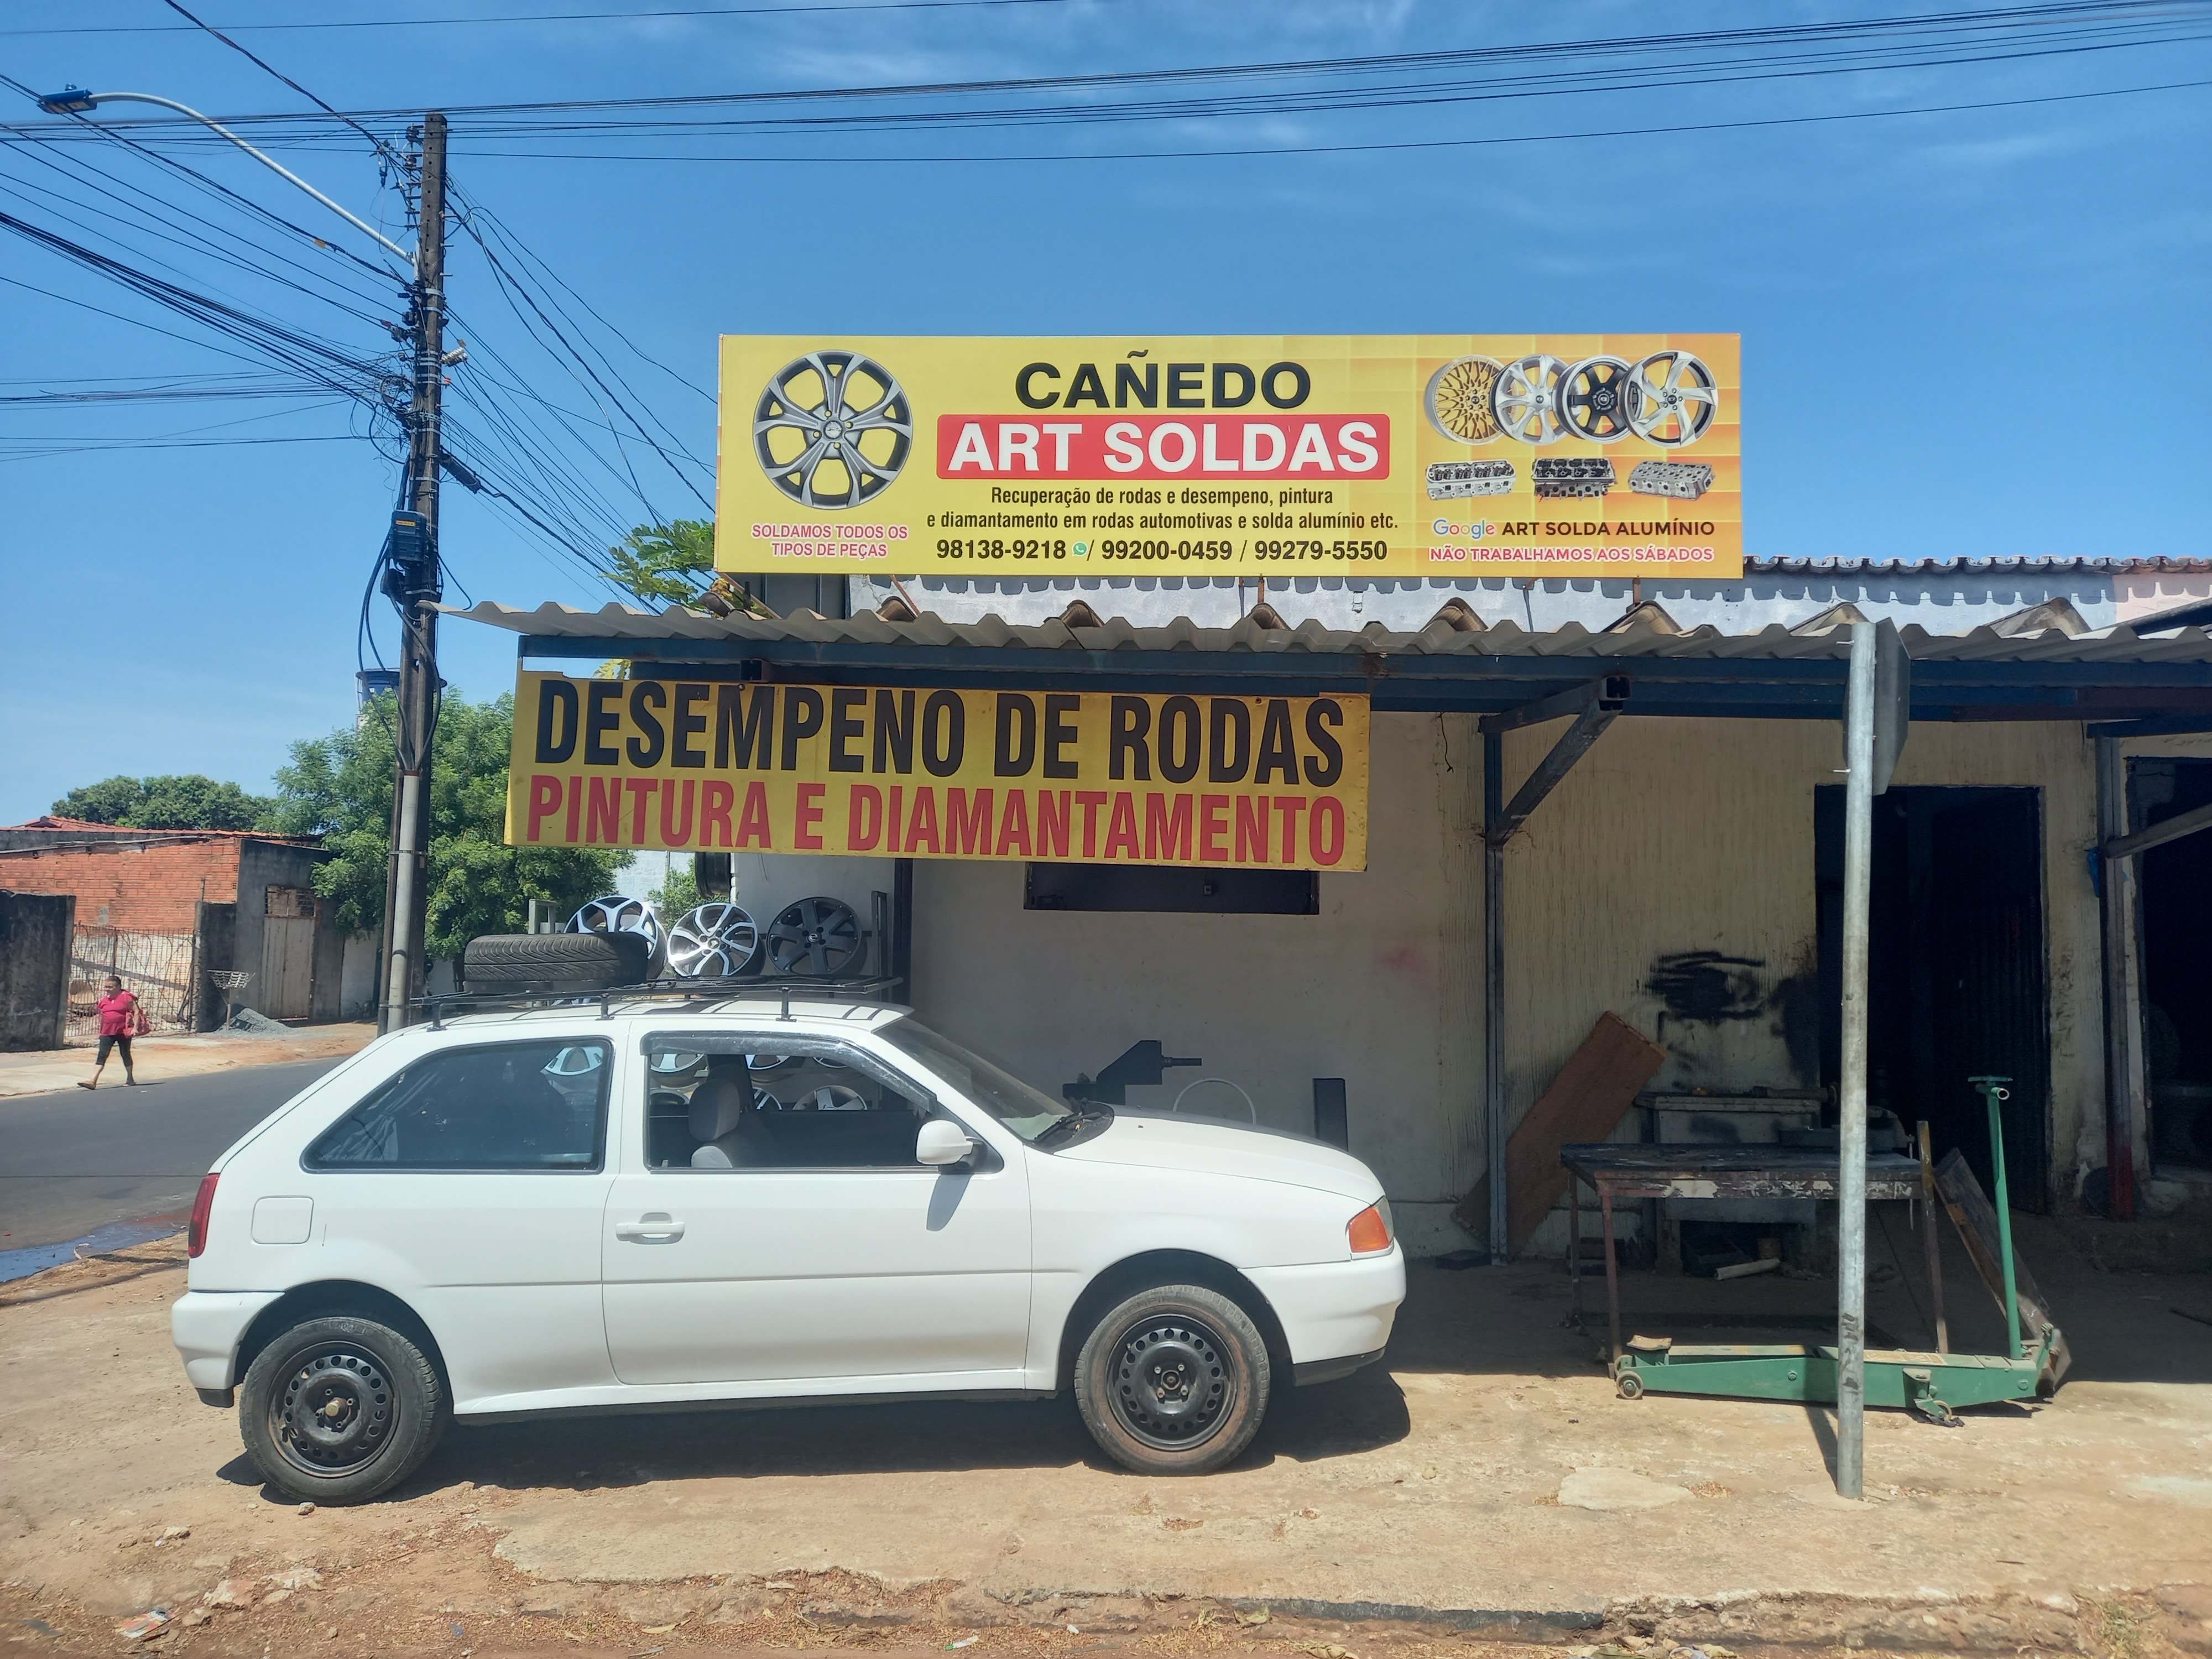  Solda alumínio em araguaína - CANEDO ART SOLDAS